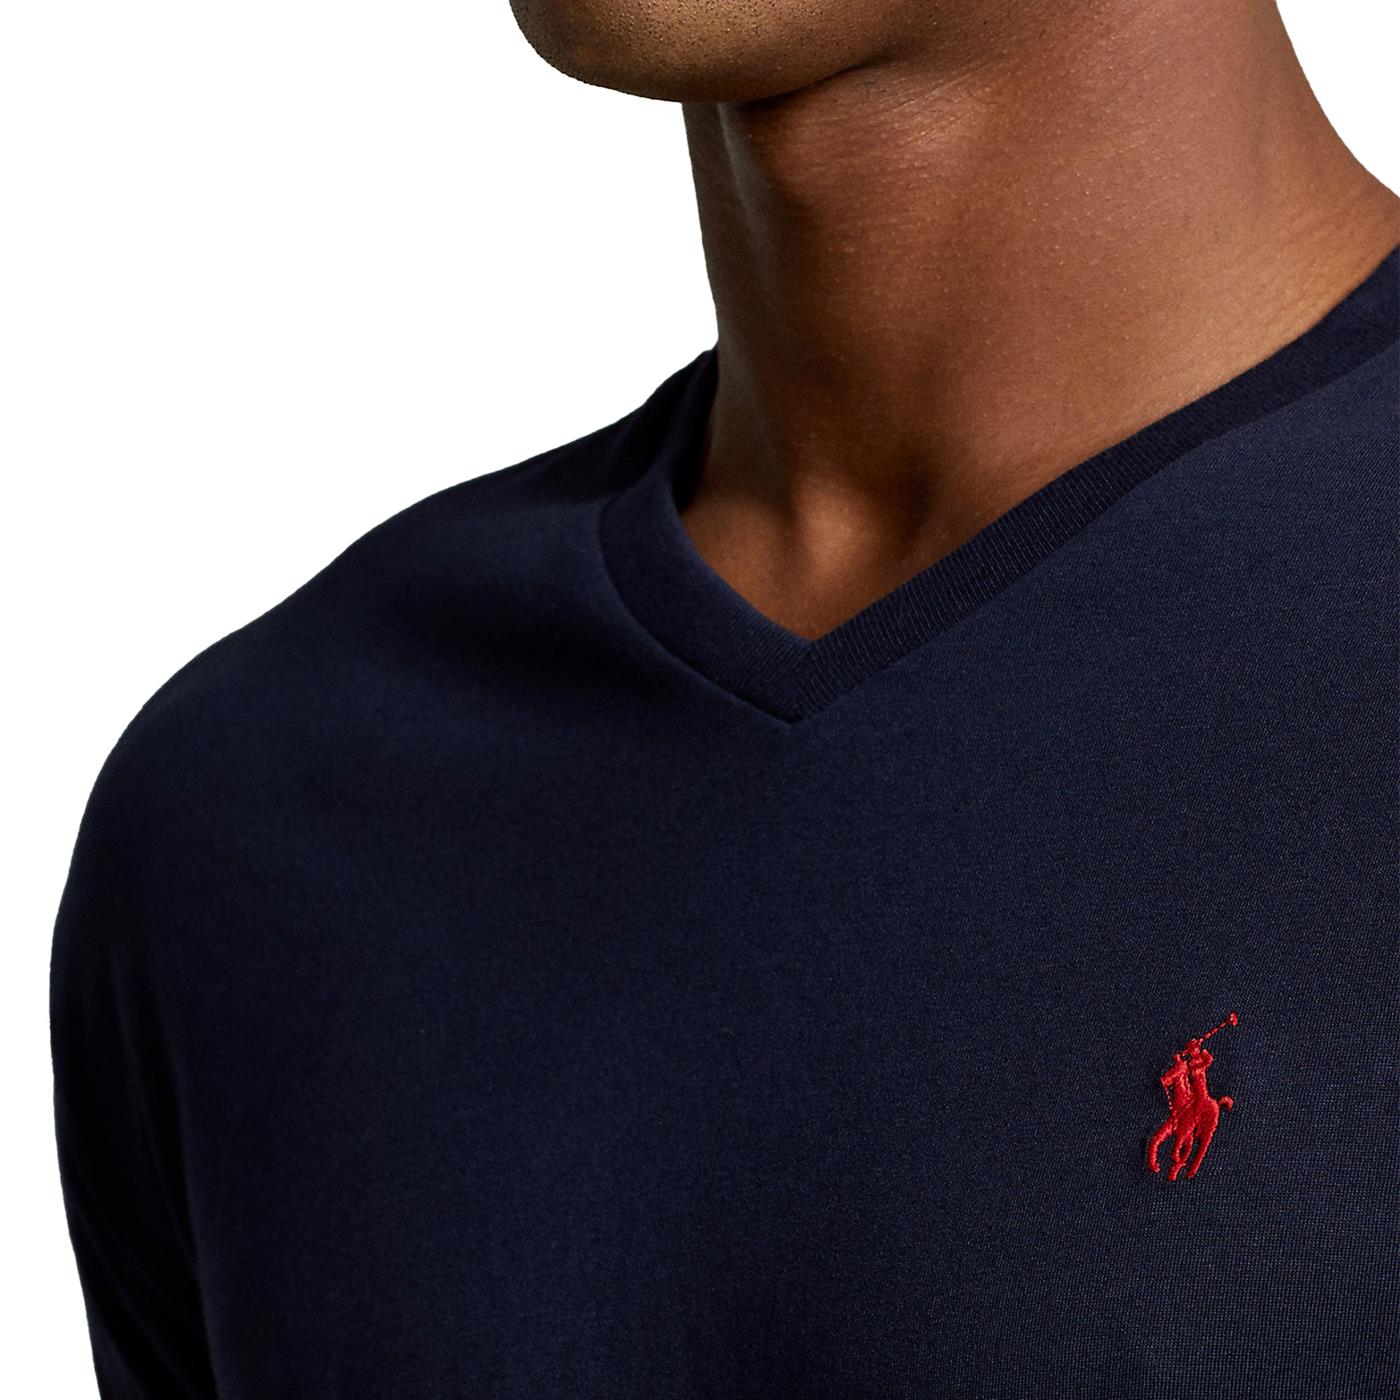 Short Sleeve V-Neck T-Shirt